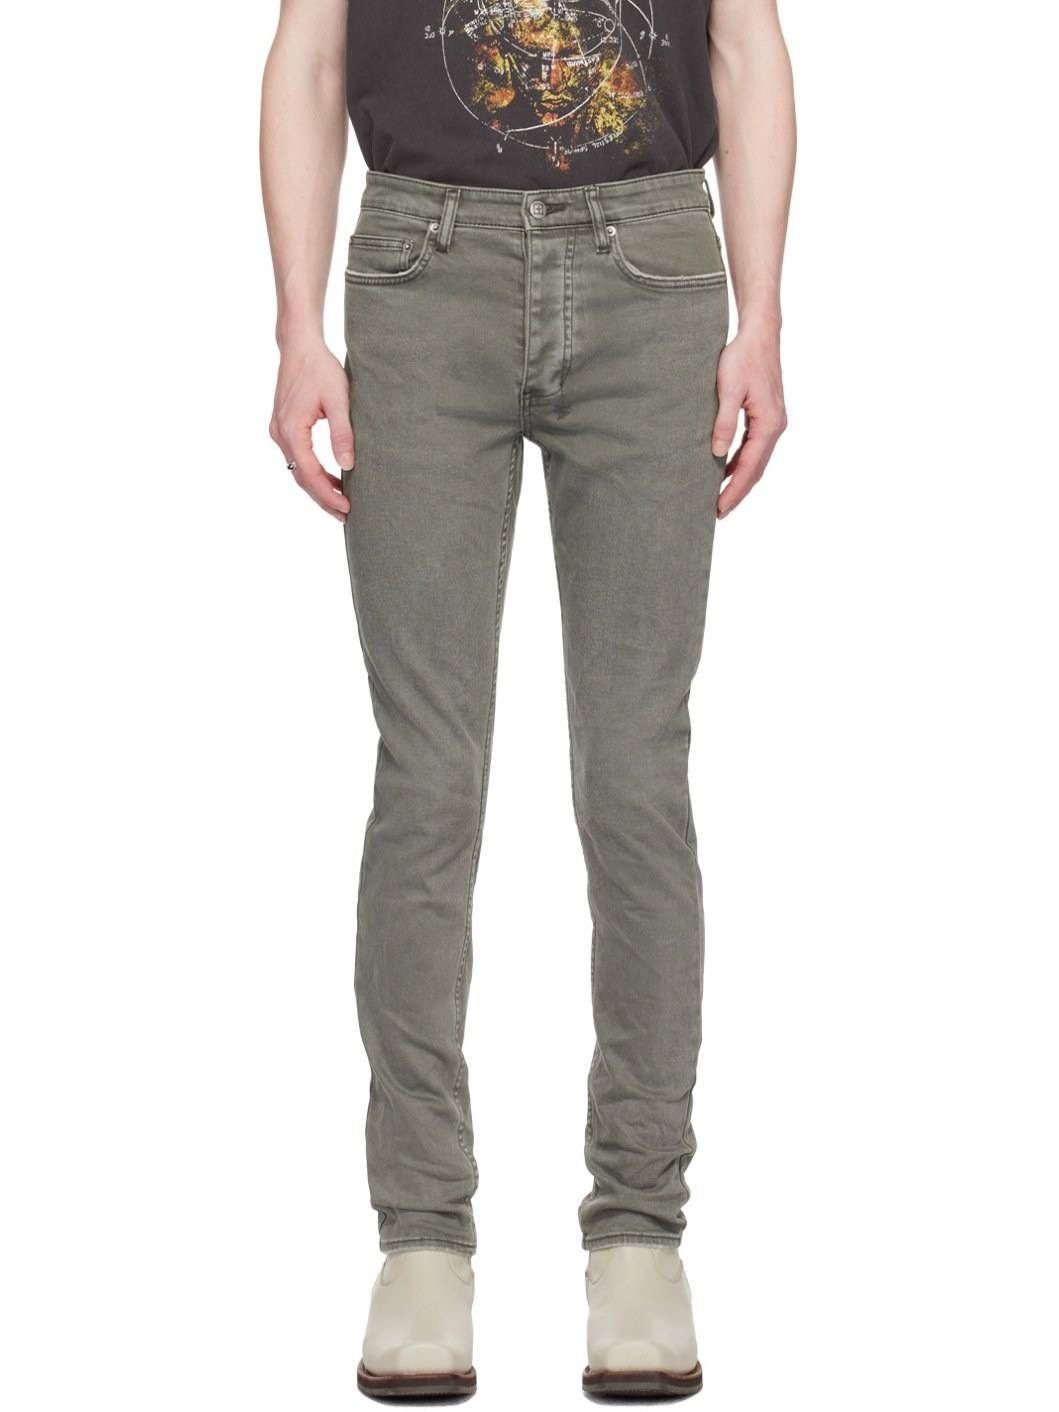 Gray Chitch Surplus Jeans - 1